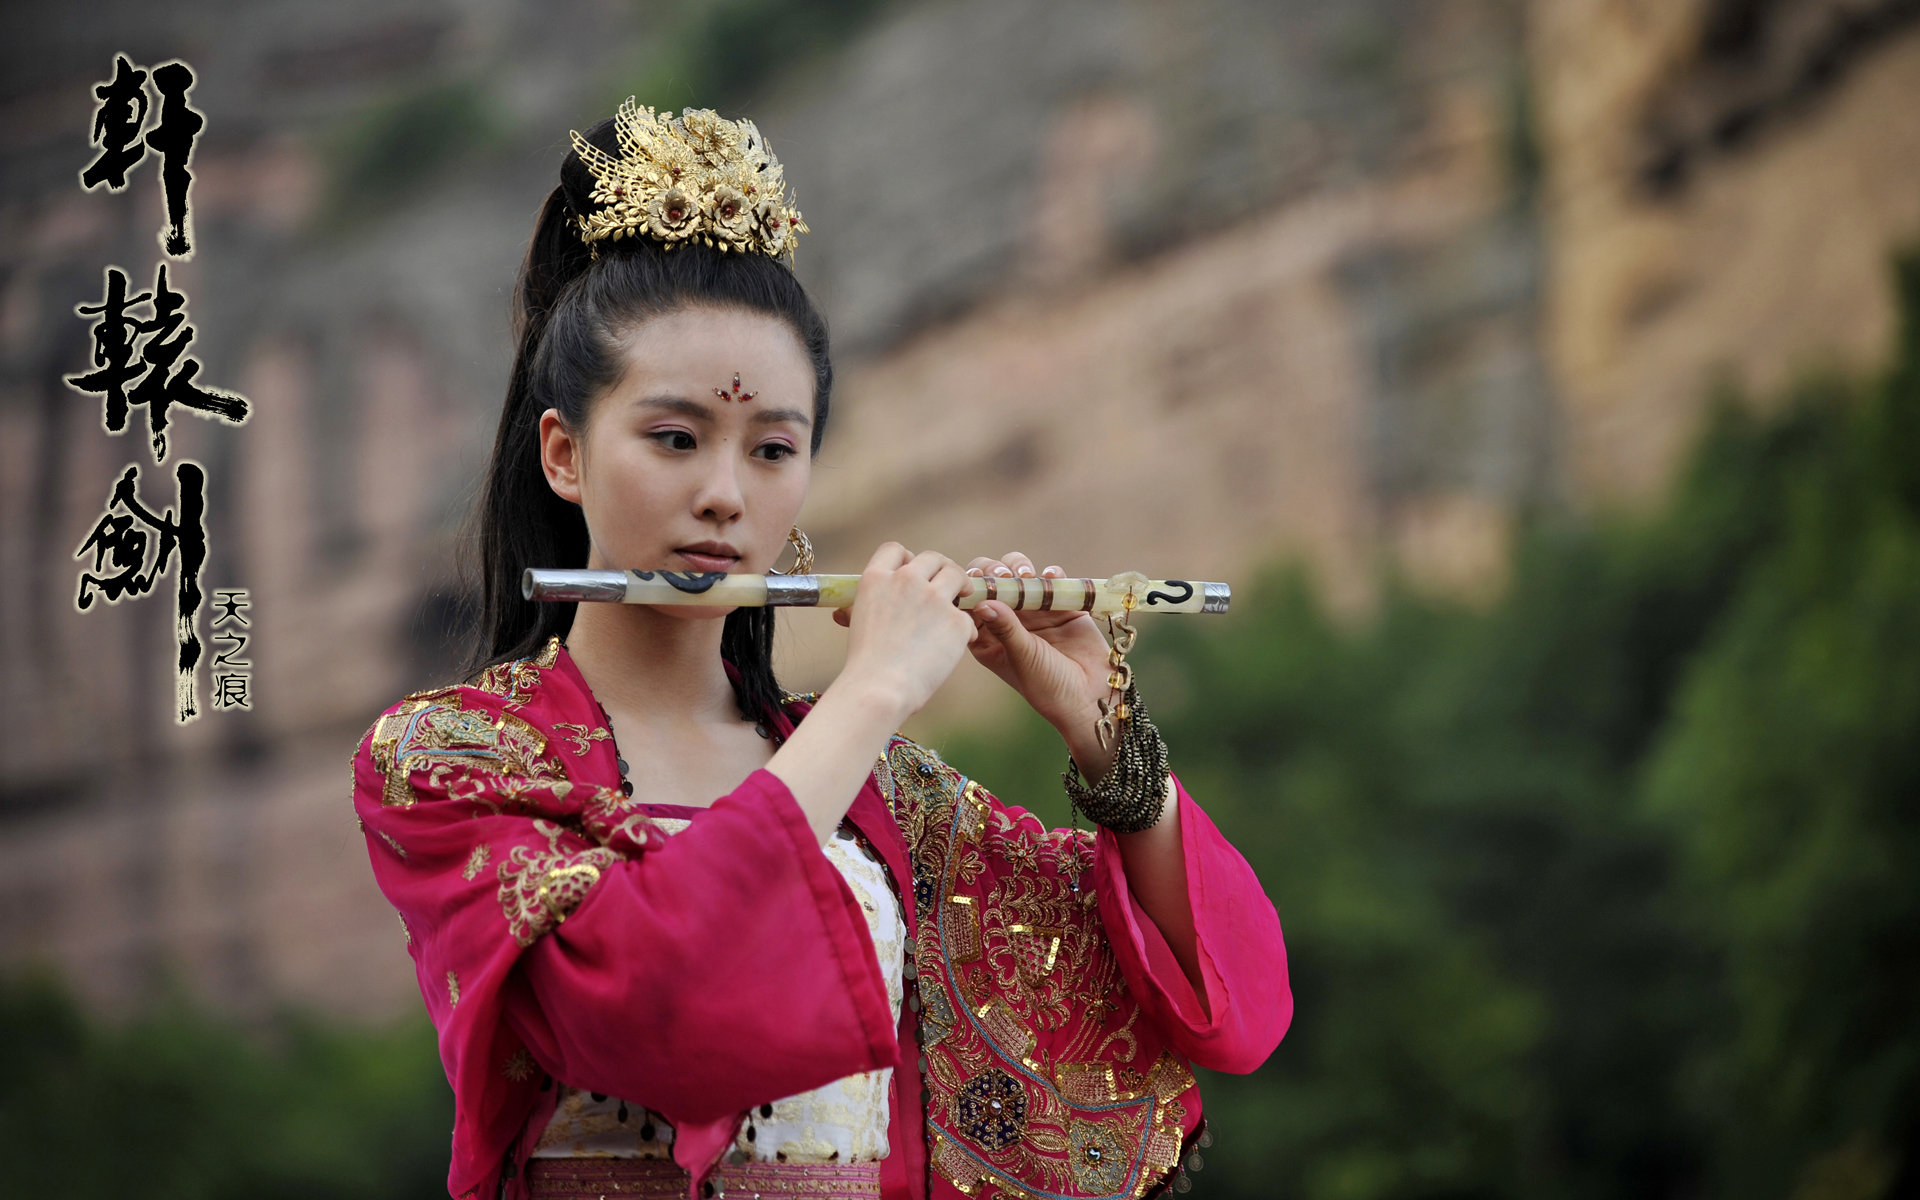 Best Chinese Music Instrumental. Chinese Music Instrumental #5.